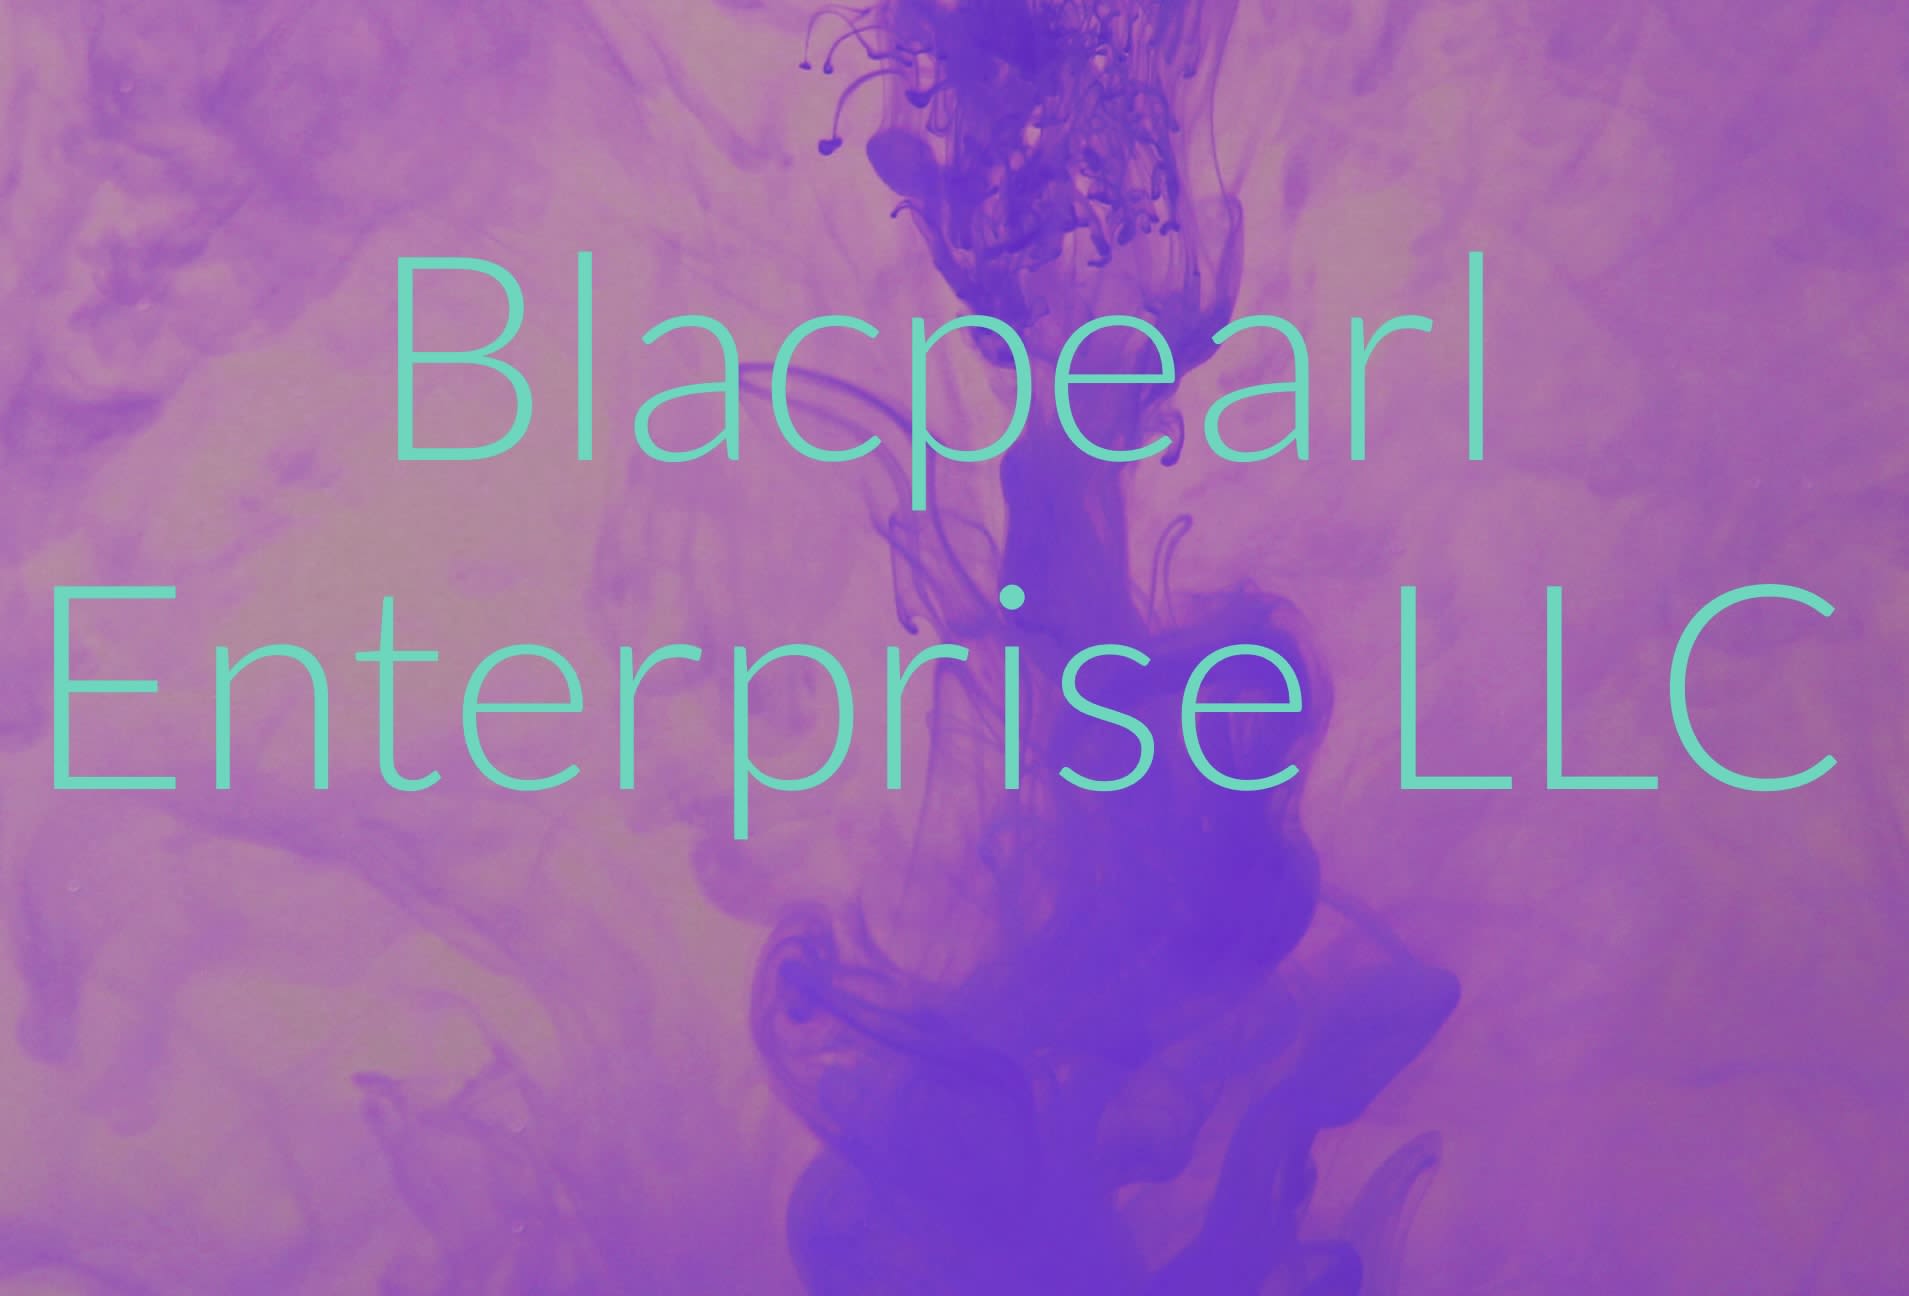 Blacpearl Enterprises Llc